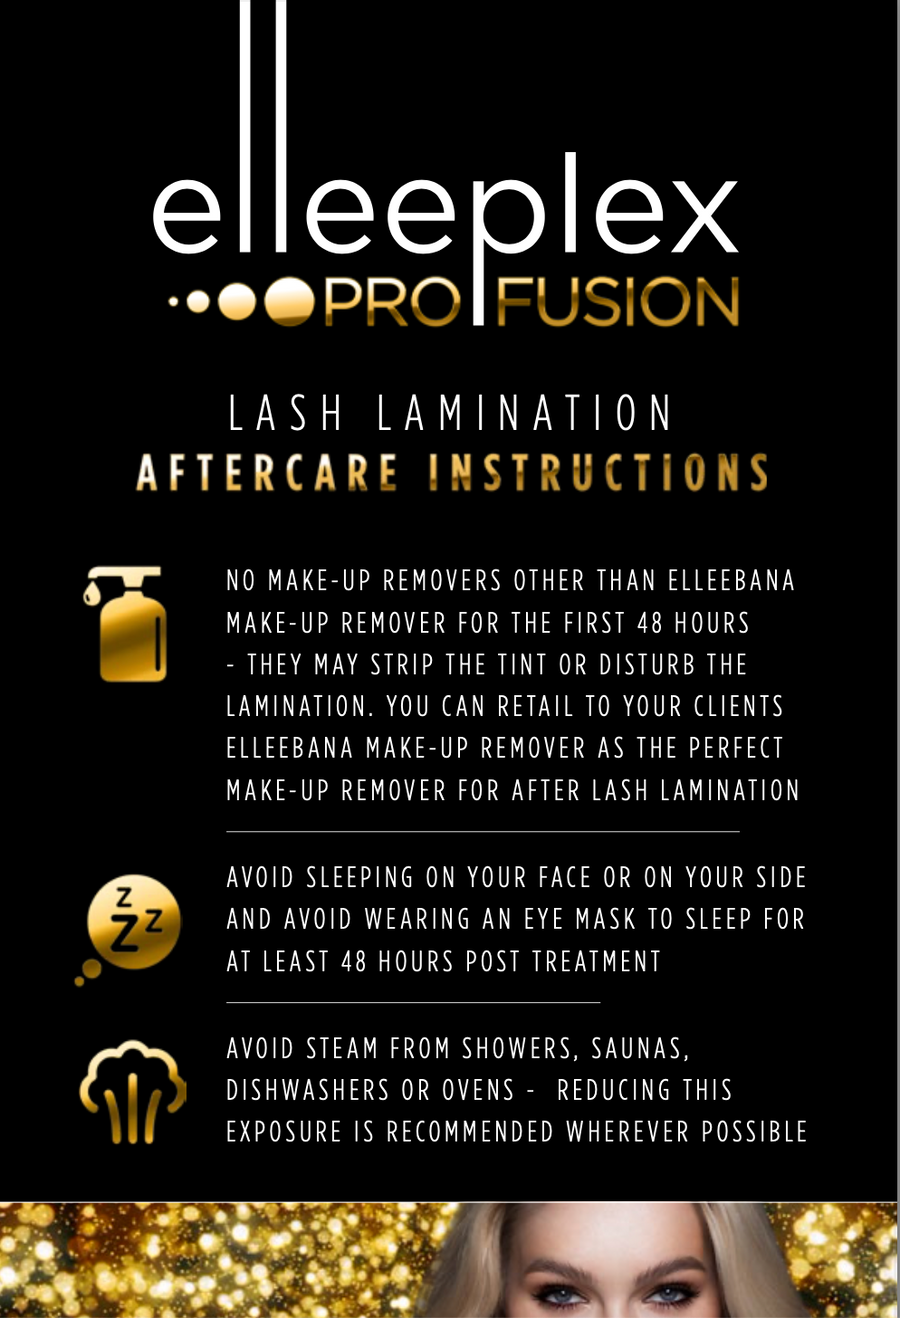 Elleeplex Profusion Lash Lamination After Care Flyer (2 sides) | Digital Download